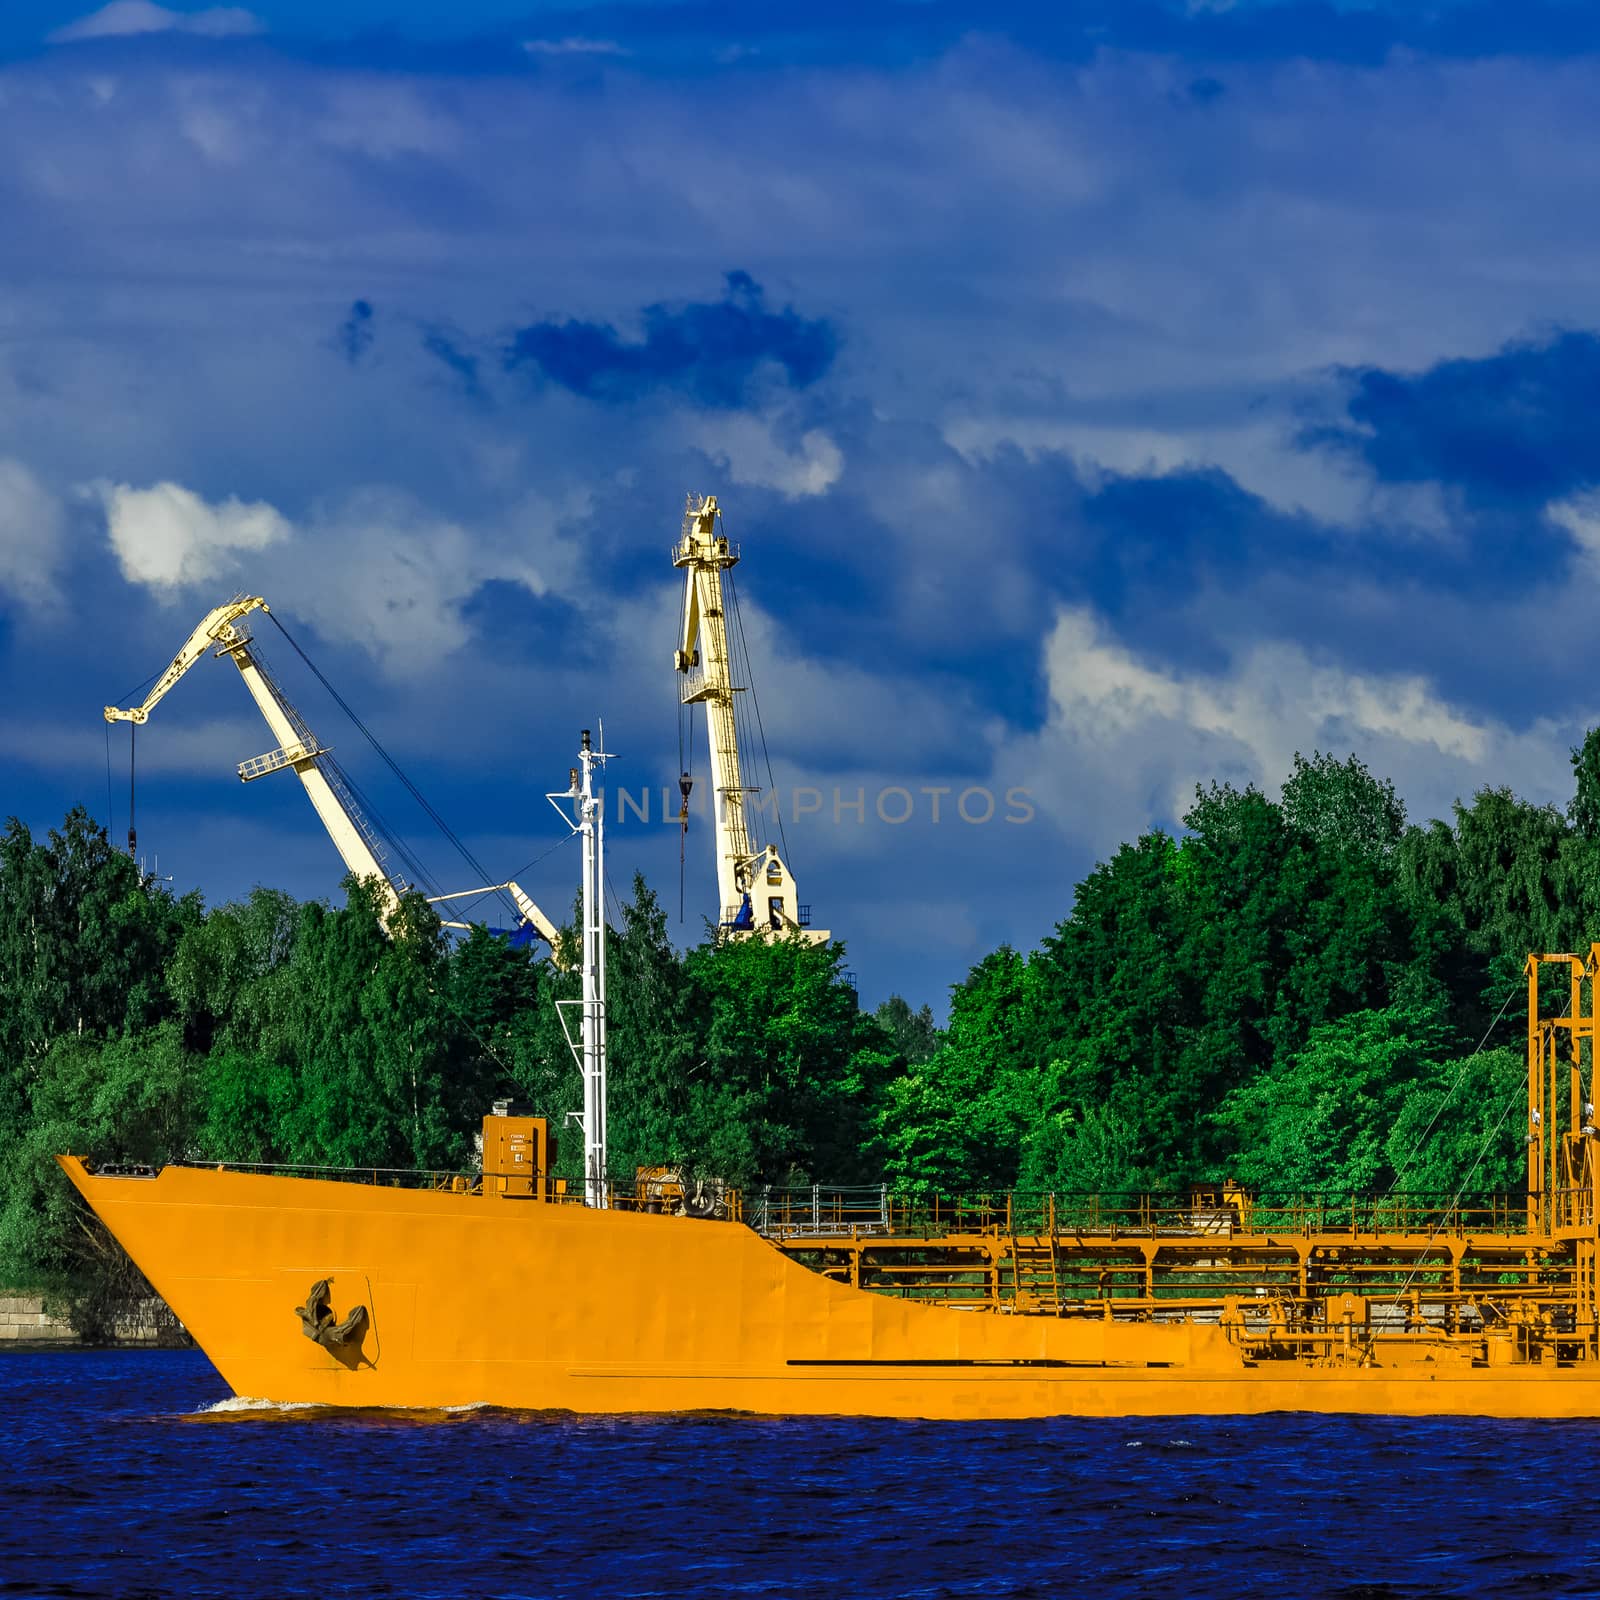 Yellow tanker ship by sengnsp